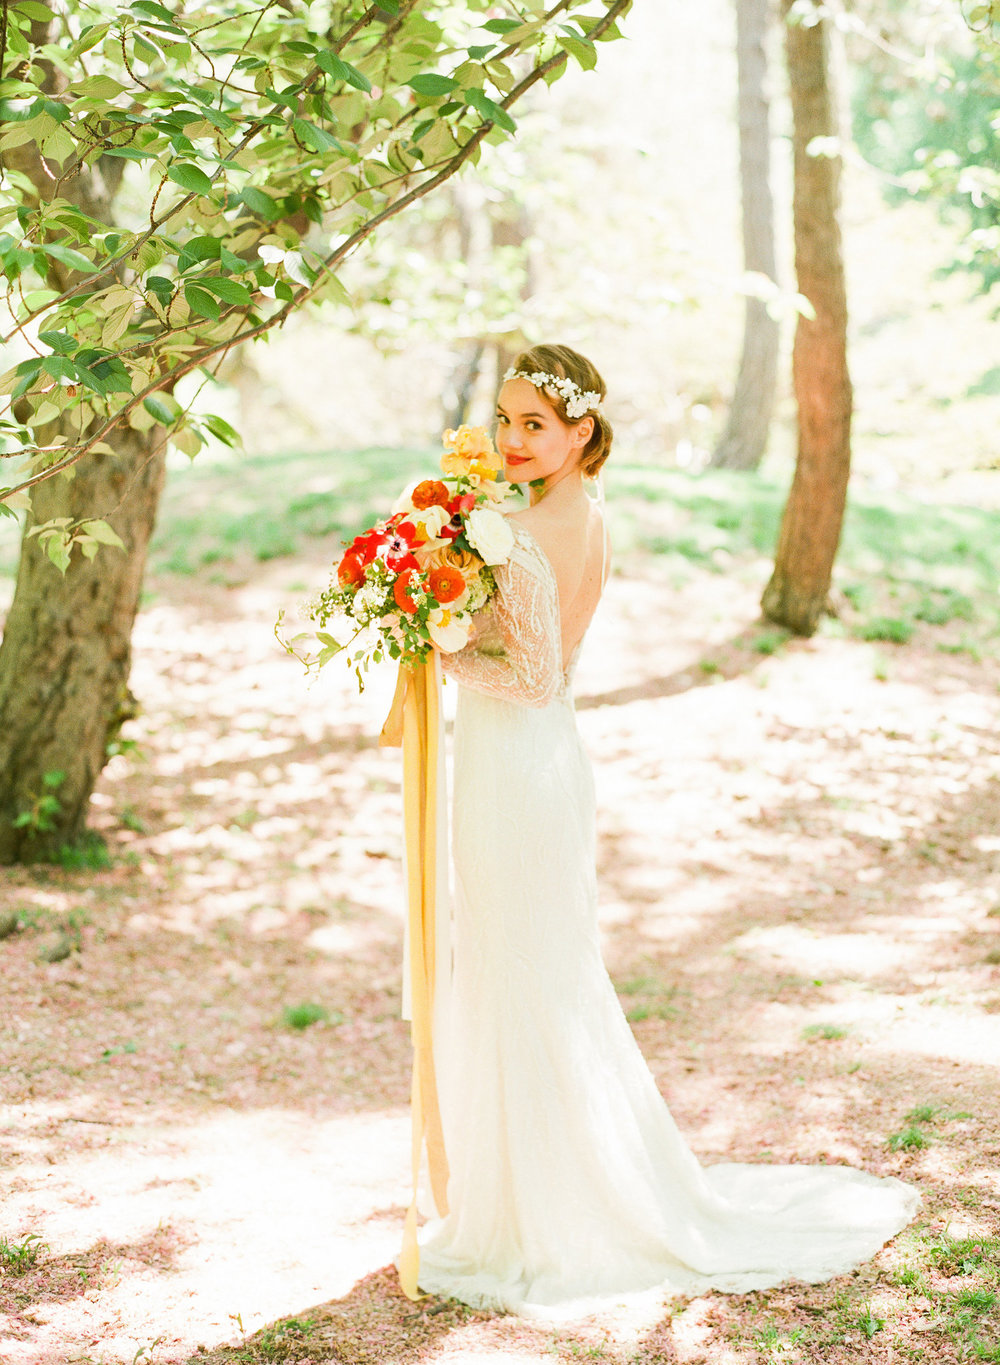 Morning Glow - Full Aperture Floral & Lindsay Madden Photography 52.jpeg